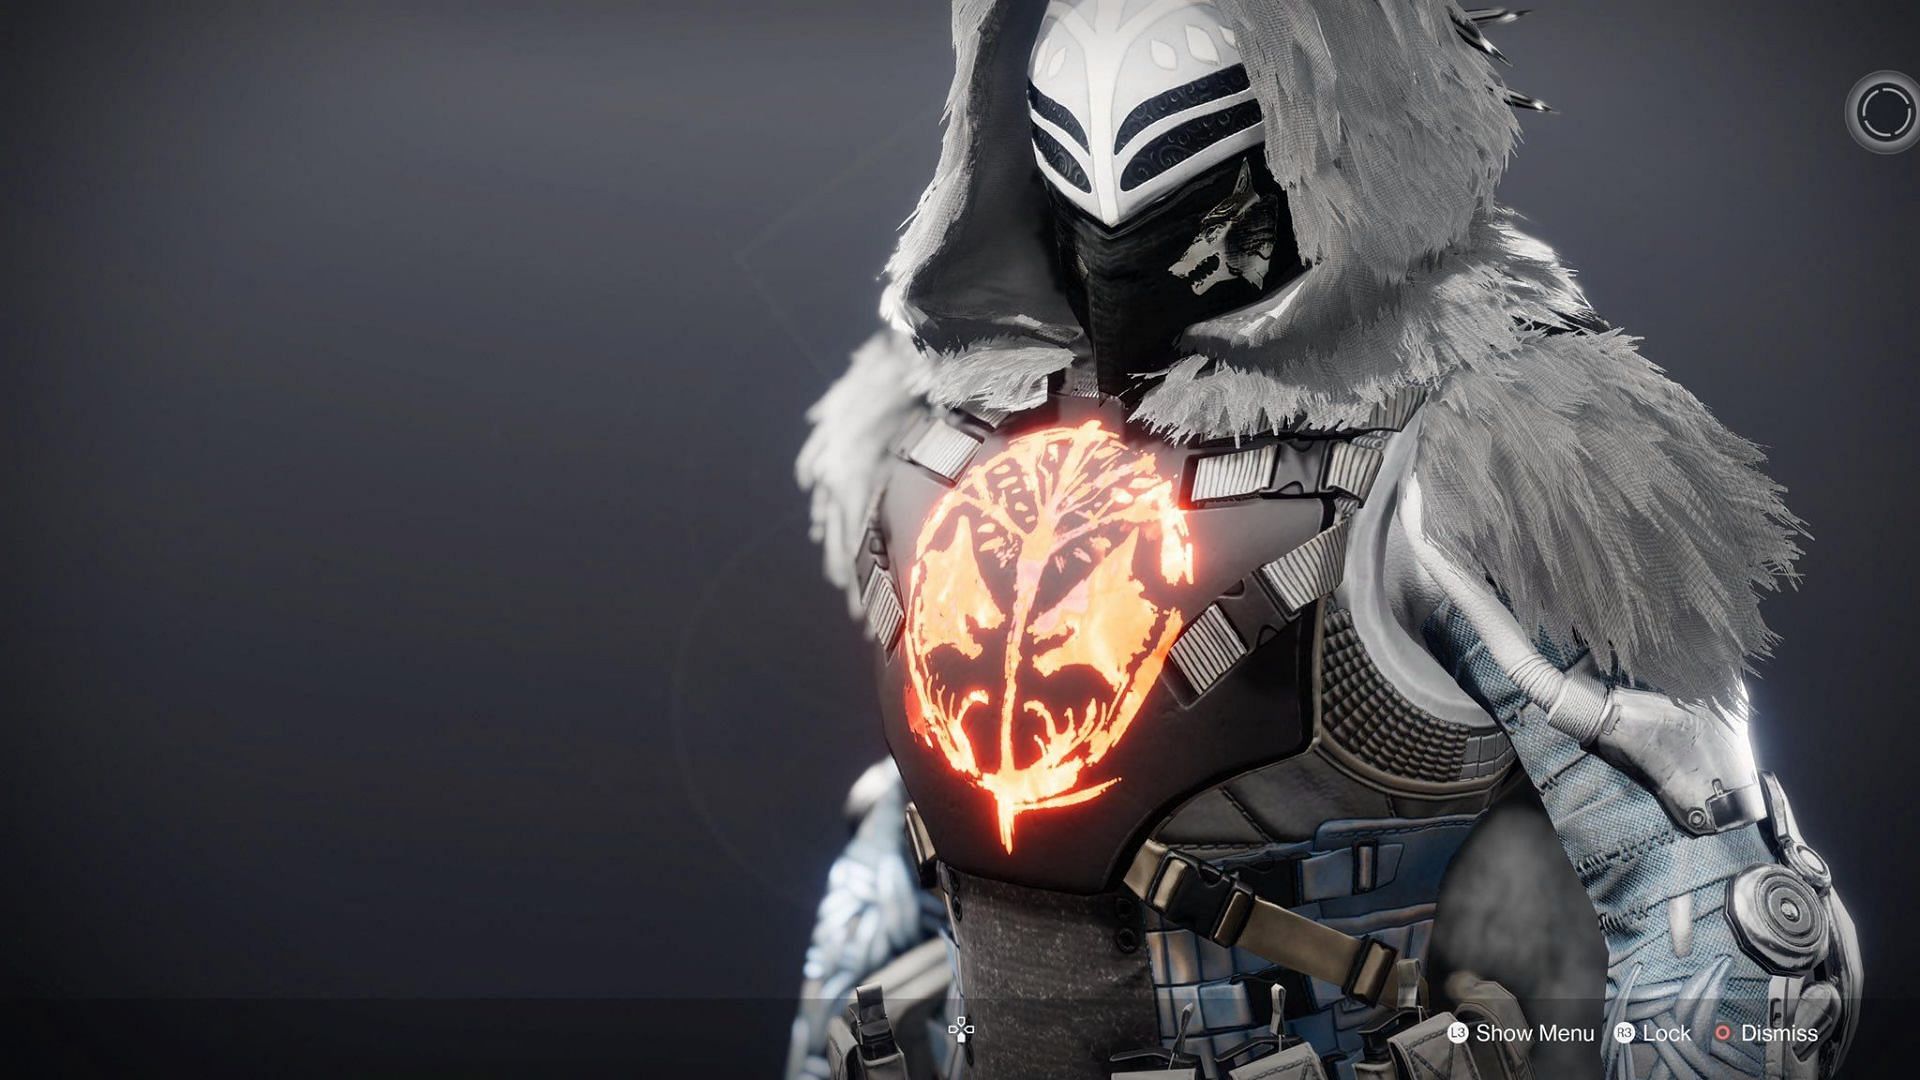 Newest armor glow in Destiny 2 Iron Banner (Image via DestinyNostalgia on Twitter)